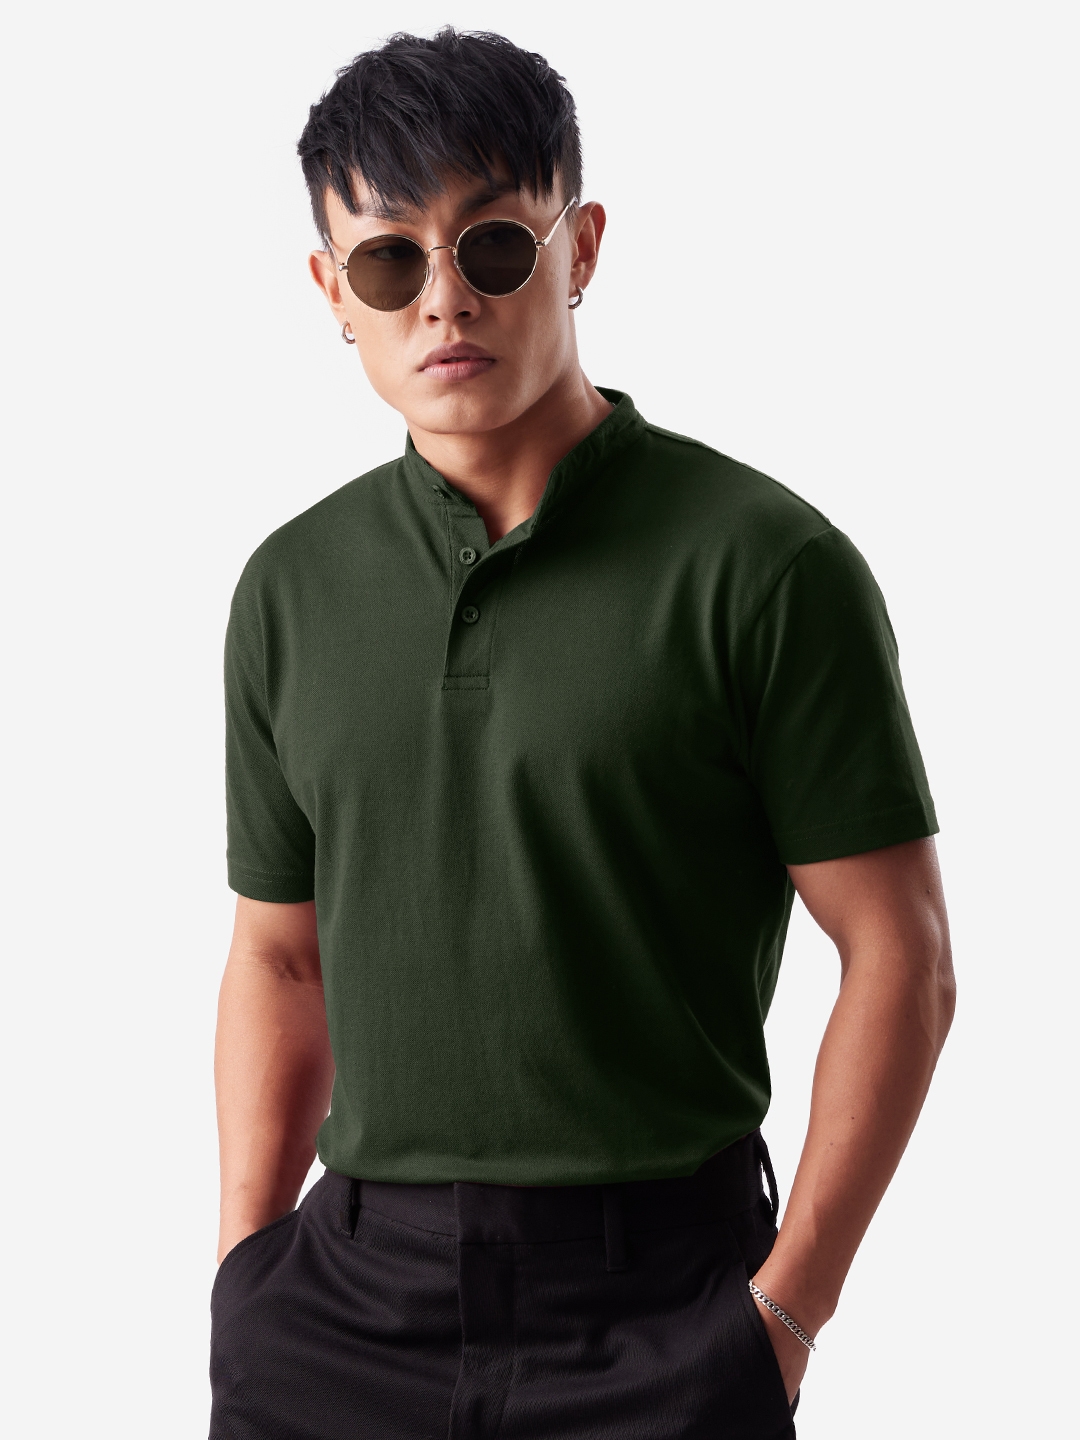 The Souled Store | Men's Solids: Dark Olive Mandarin Polo T-Shirt